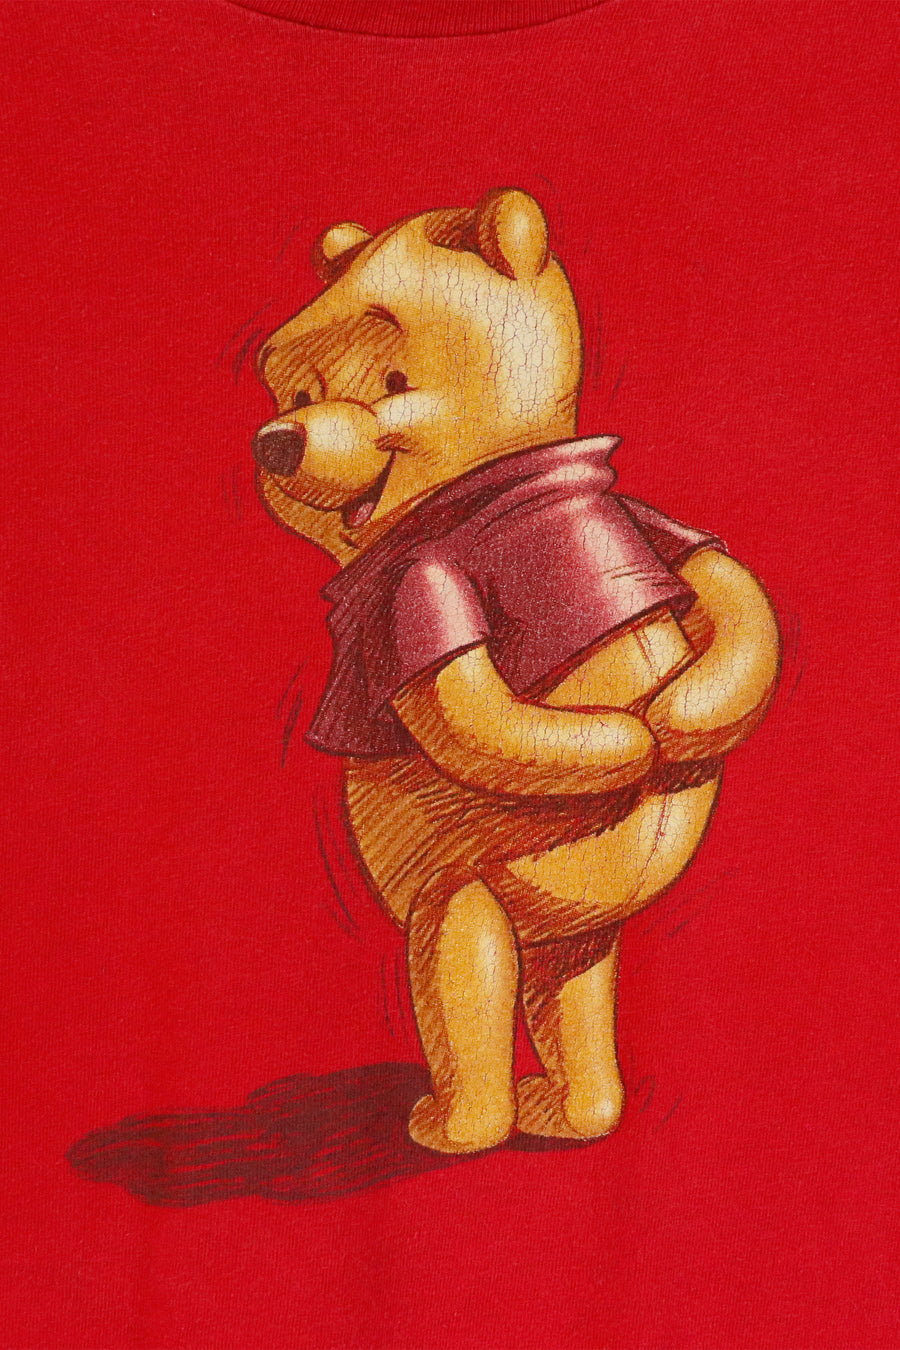 Vintage Disney Winnie The Pooh Graphic T Shirt Sz L